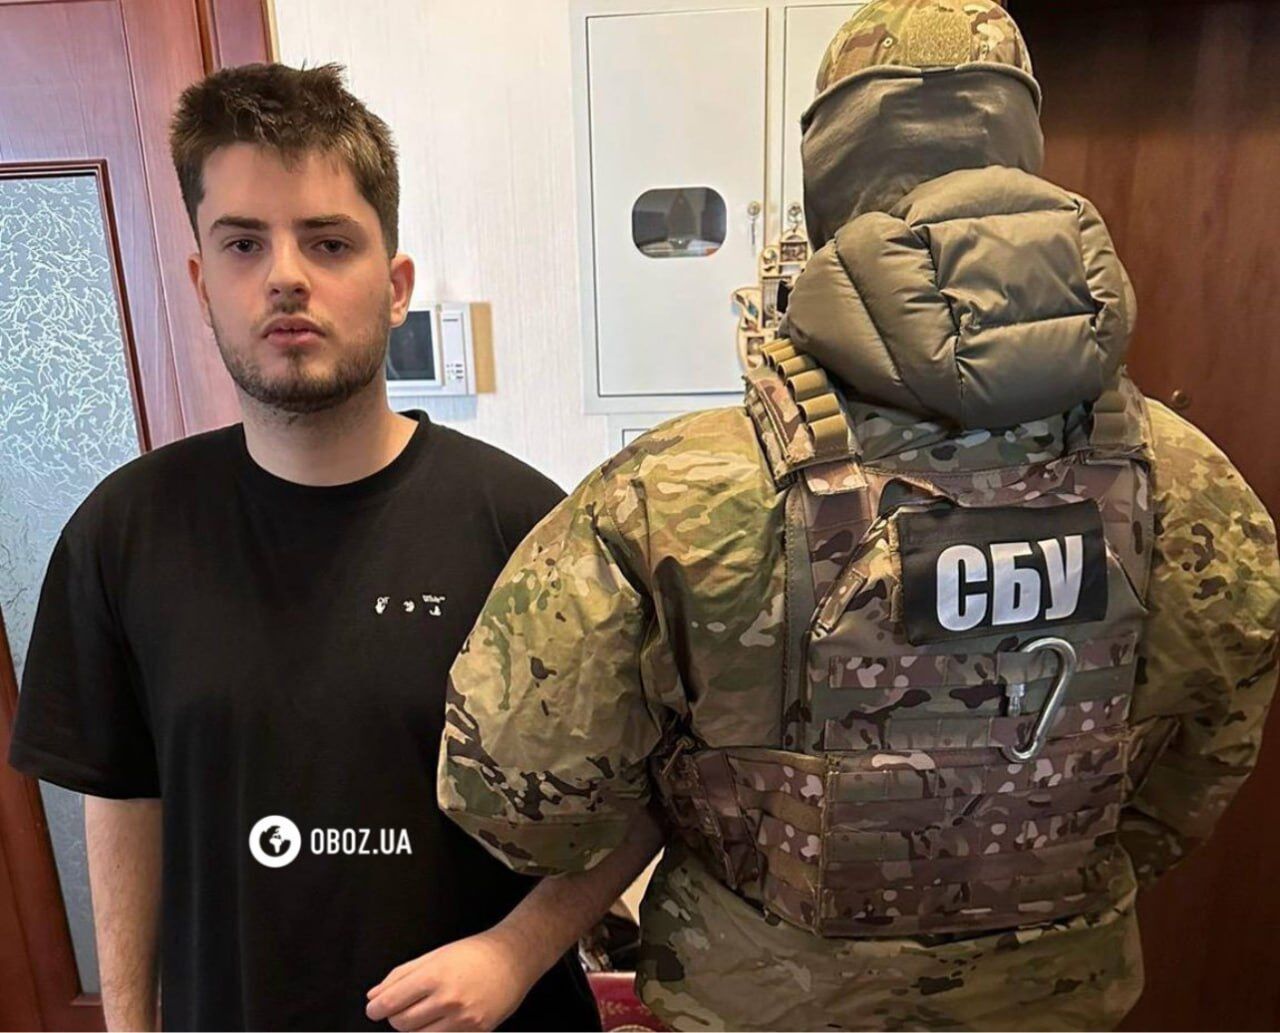 В Киевской области стрелял и кричал "Ахмат – сила": злоумышленника оперативно задержали. Фото и видео